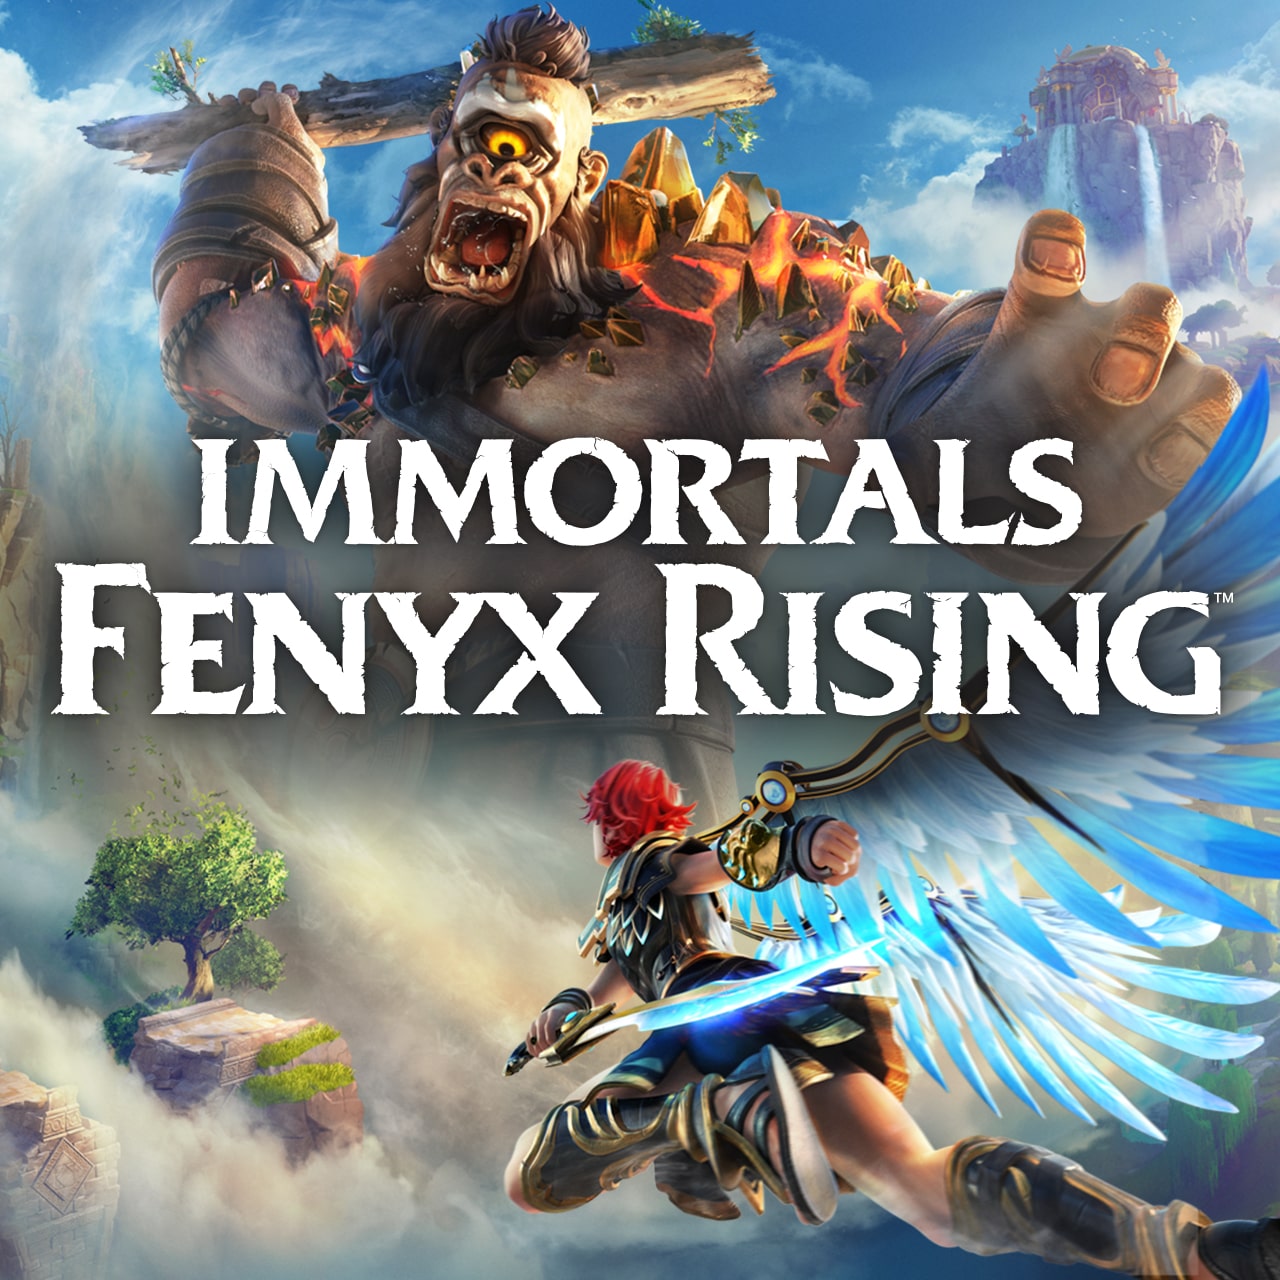 Key art for Immortals Fenyx Rising on Stadia